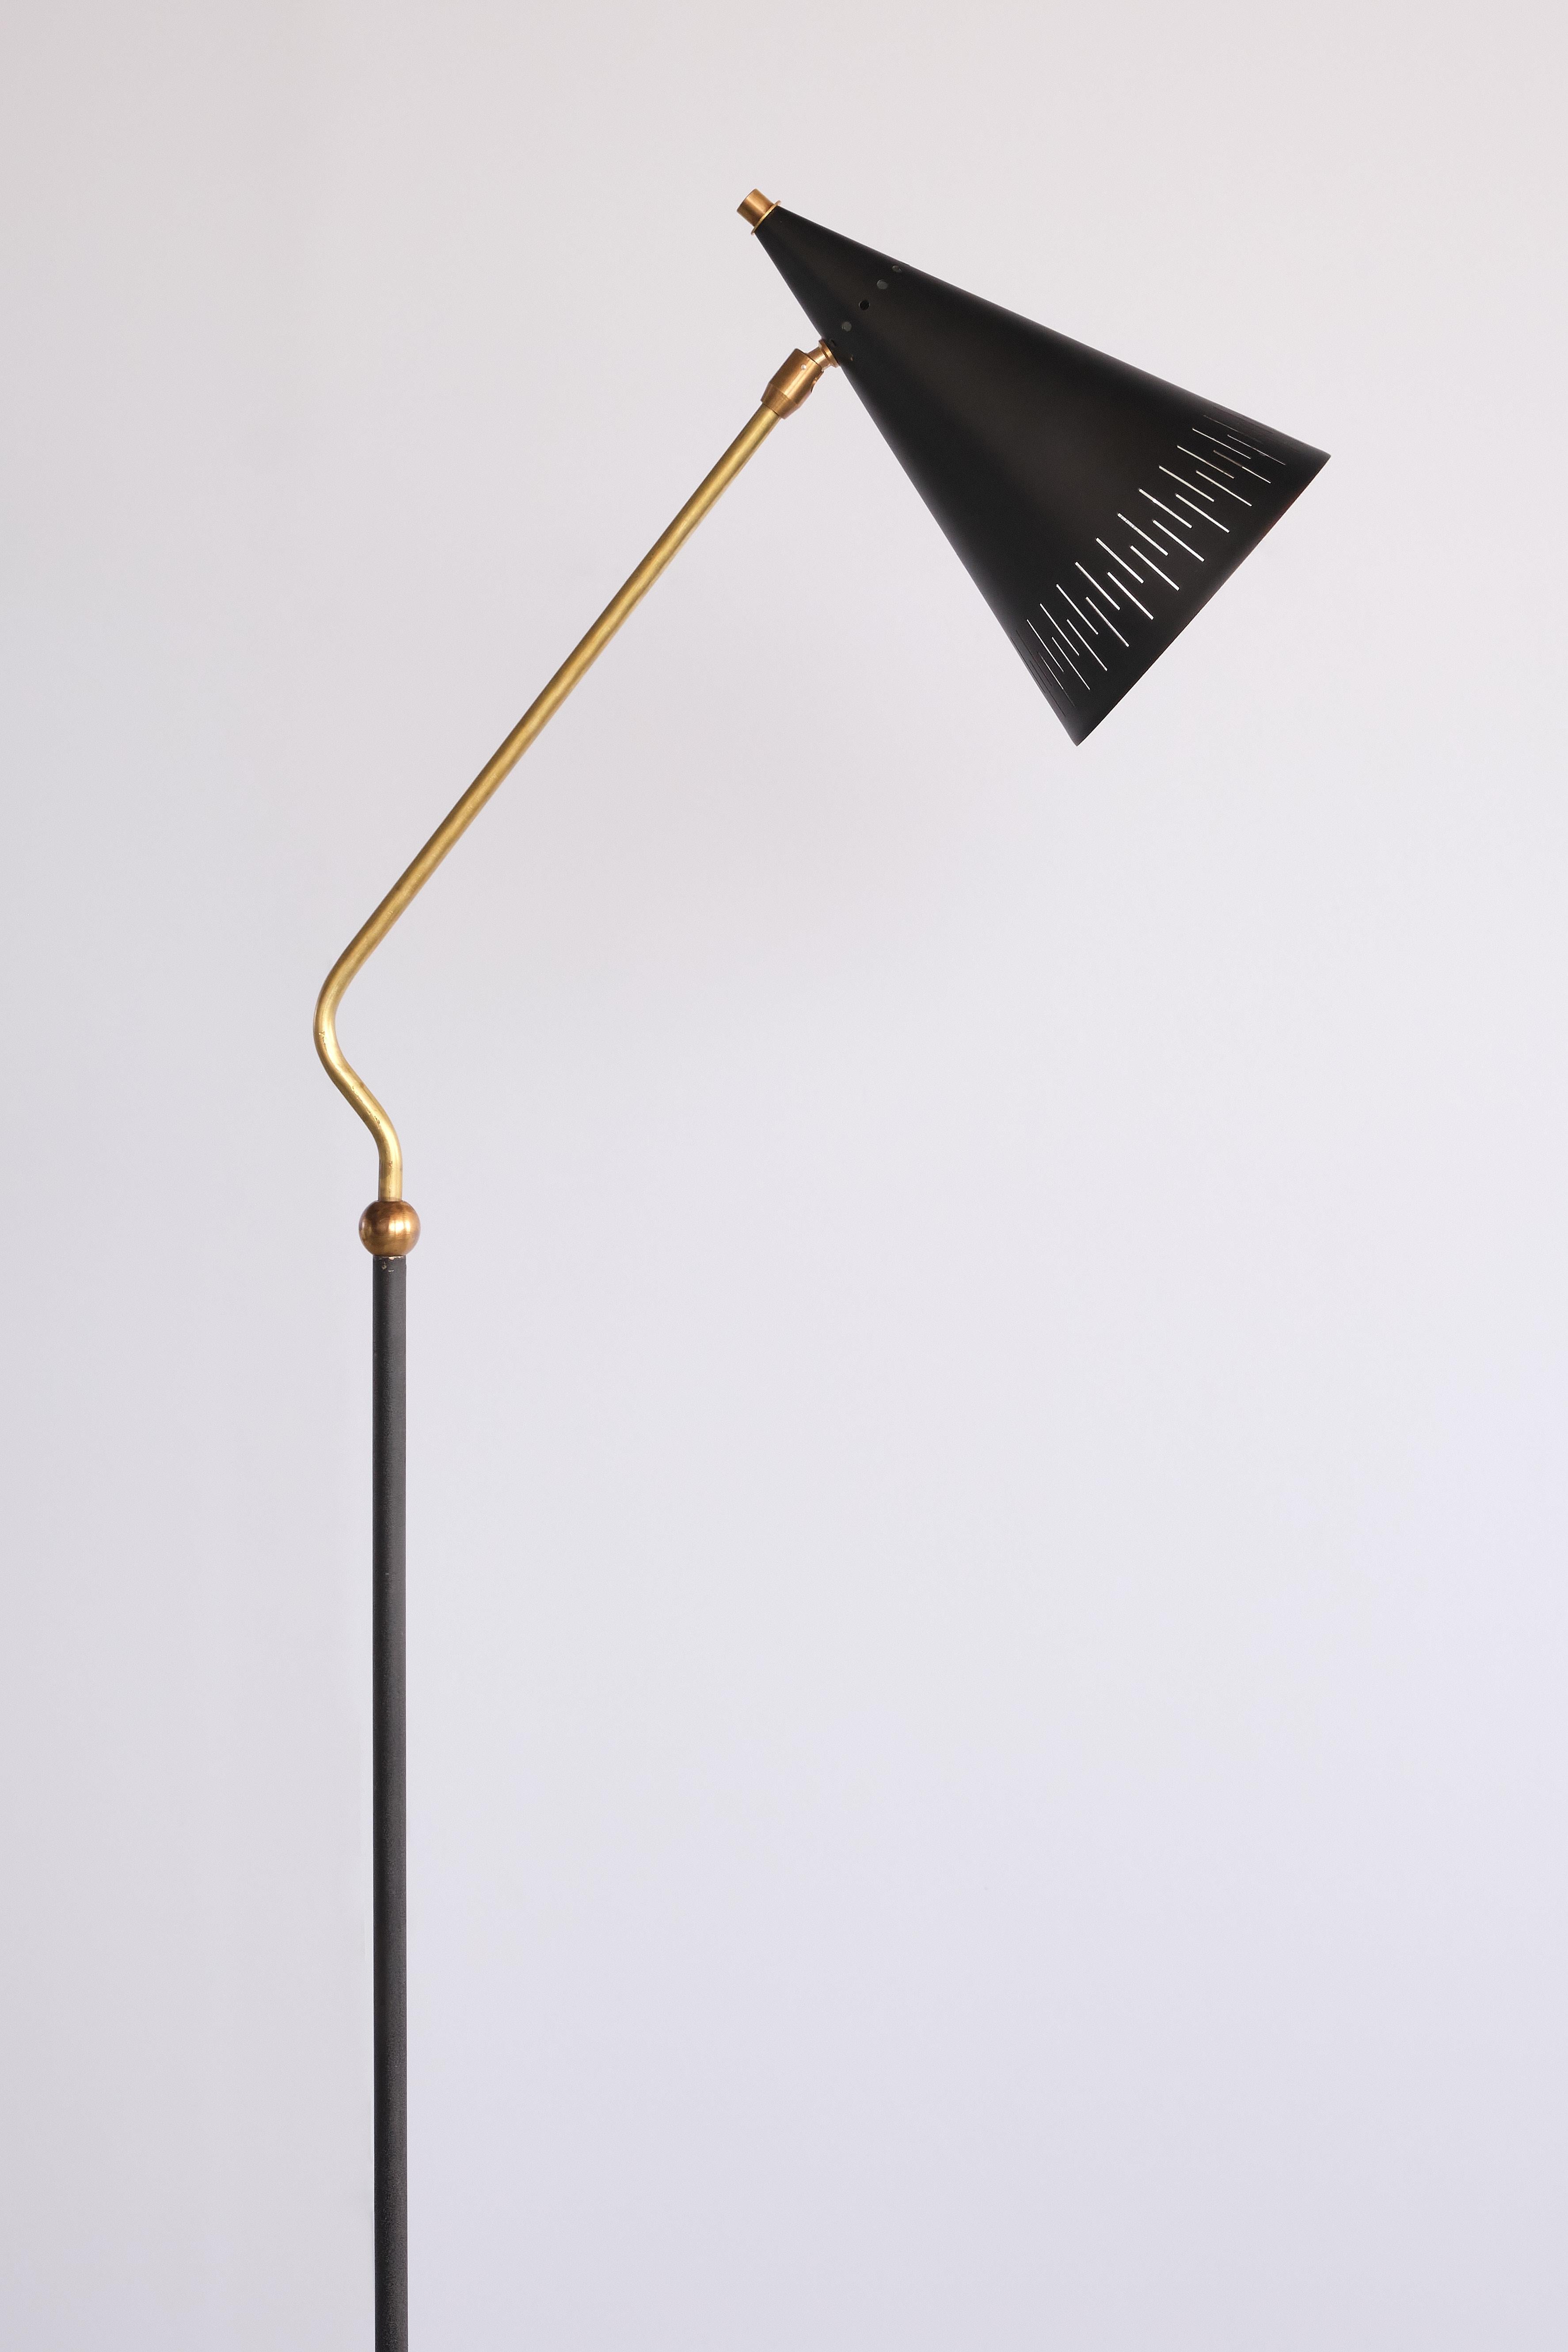 Scandinavian Modern Svend Aage Holm-Sørensen Attributed Floor Lamp, ASEA, Sweden, 1950s For Sale